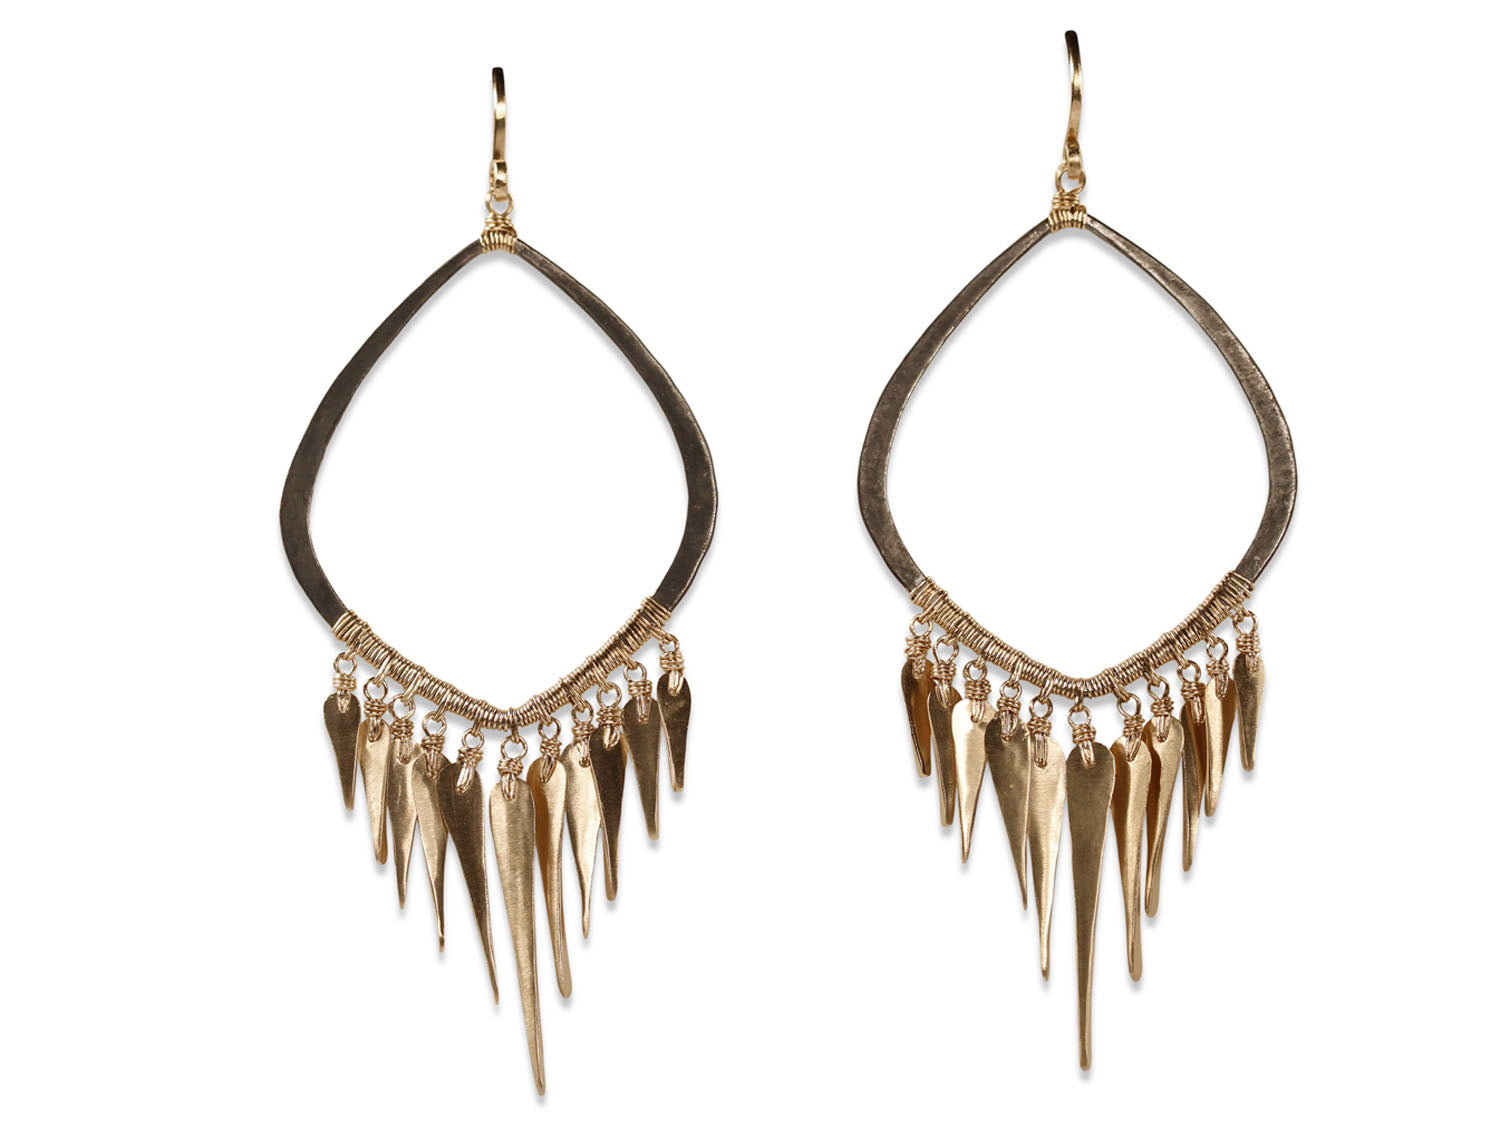 Dangling Fringe Earrings in Mixed Metals